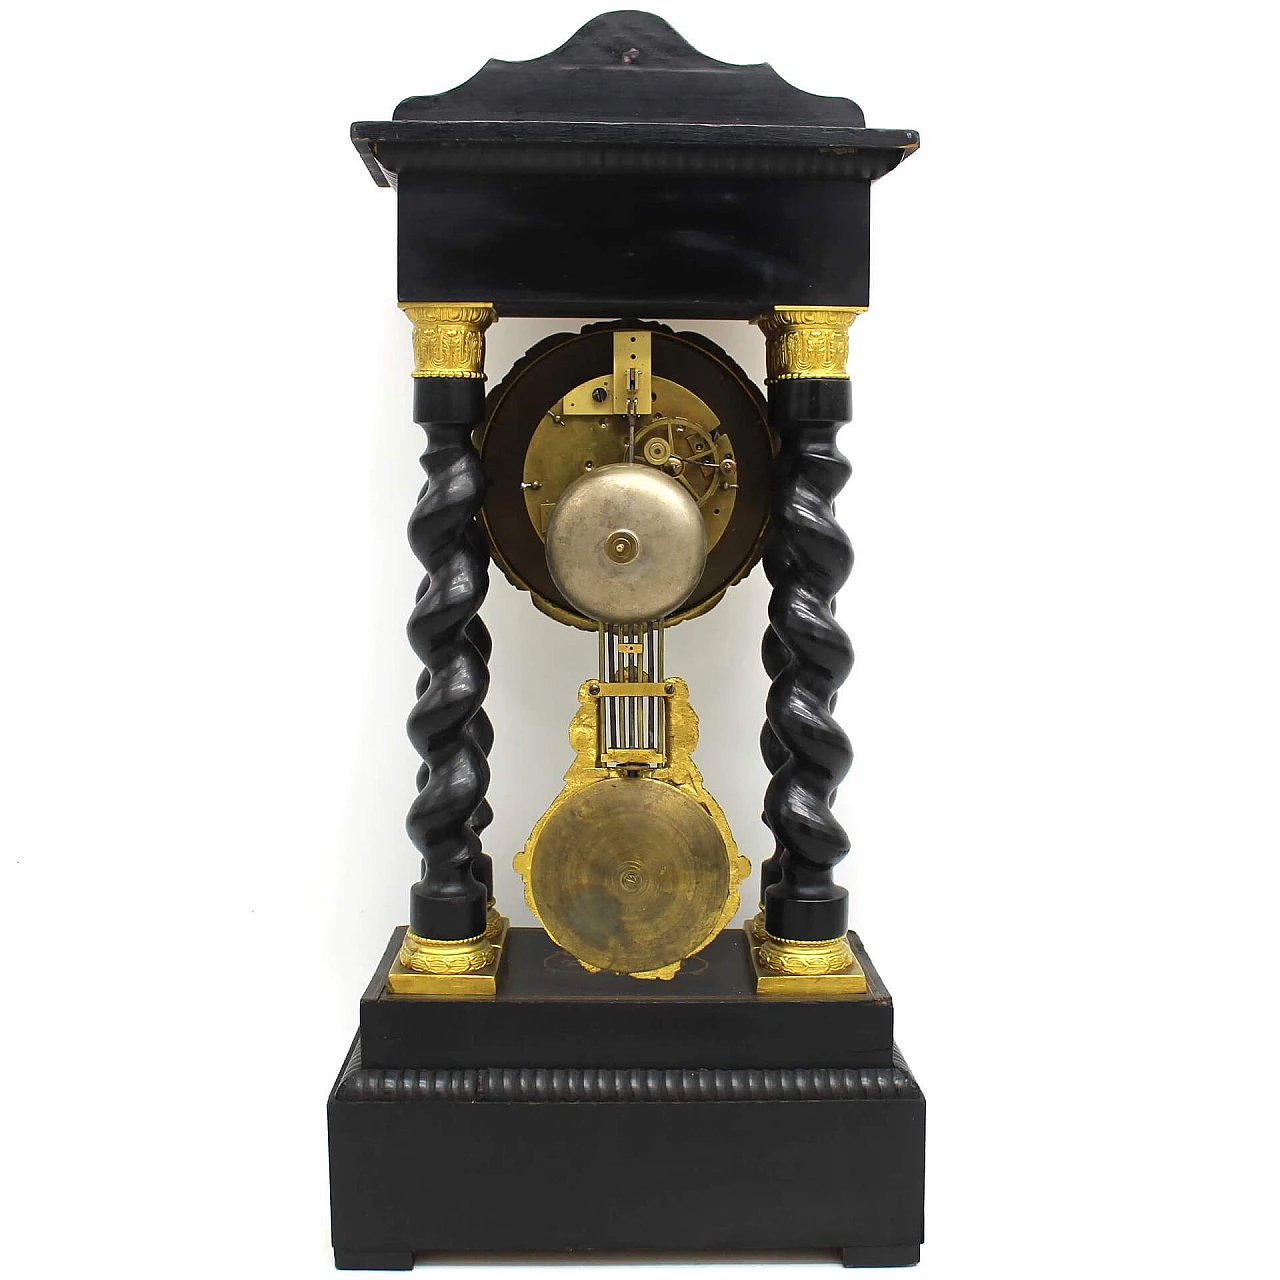 Napoleon III pendulum clock in inlaid ebonized wood and bronze, 19th century 1254242